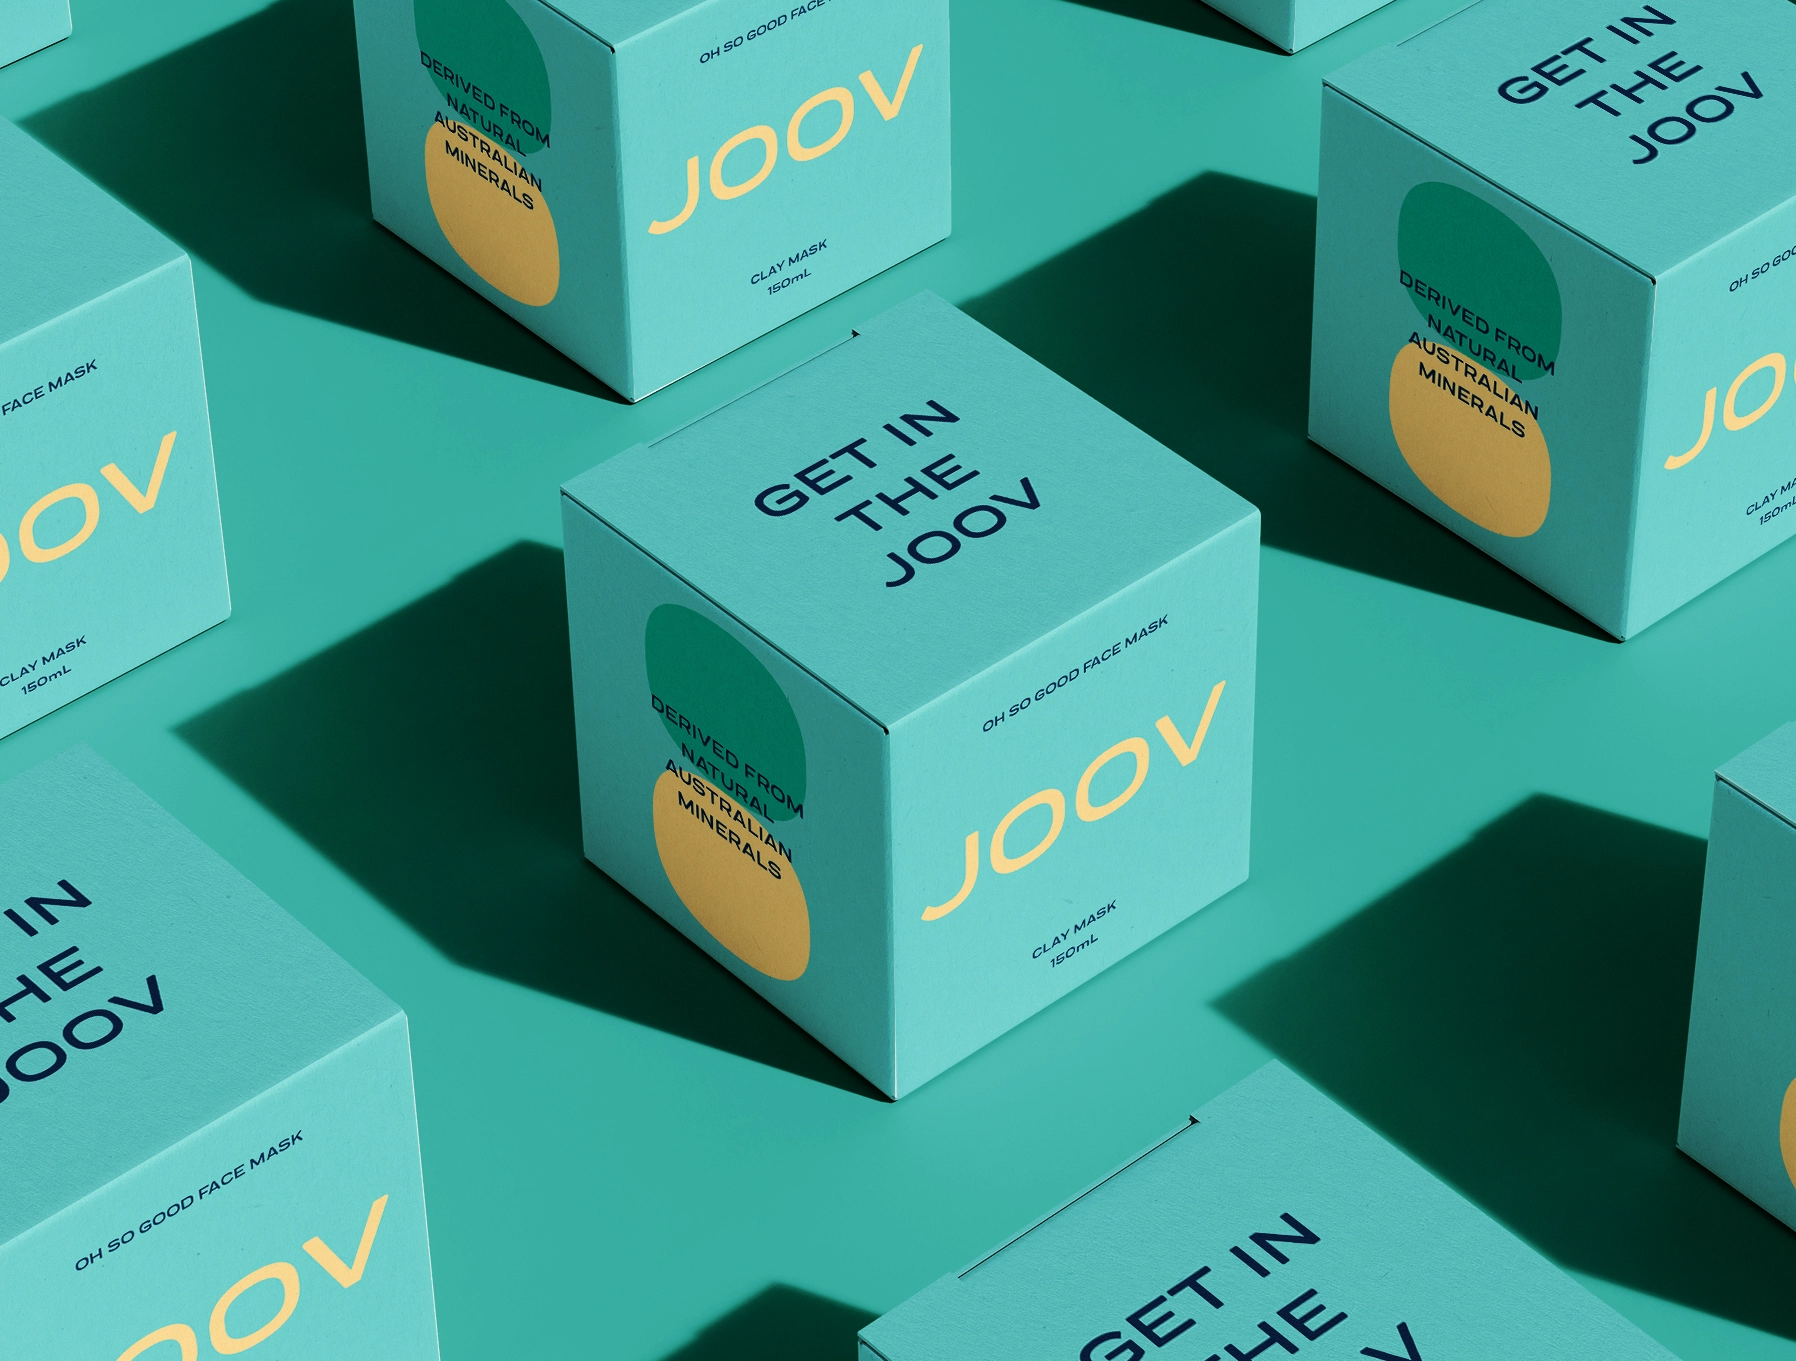 Joov product design by Kaliber Studio